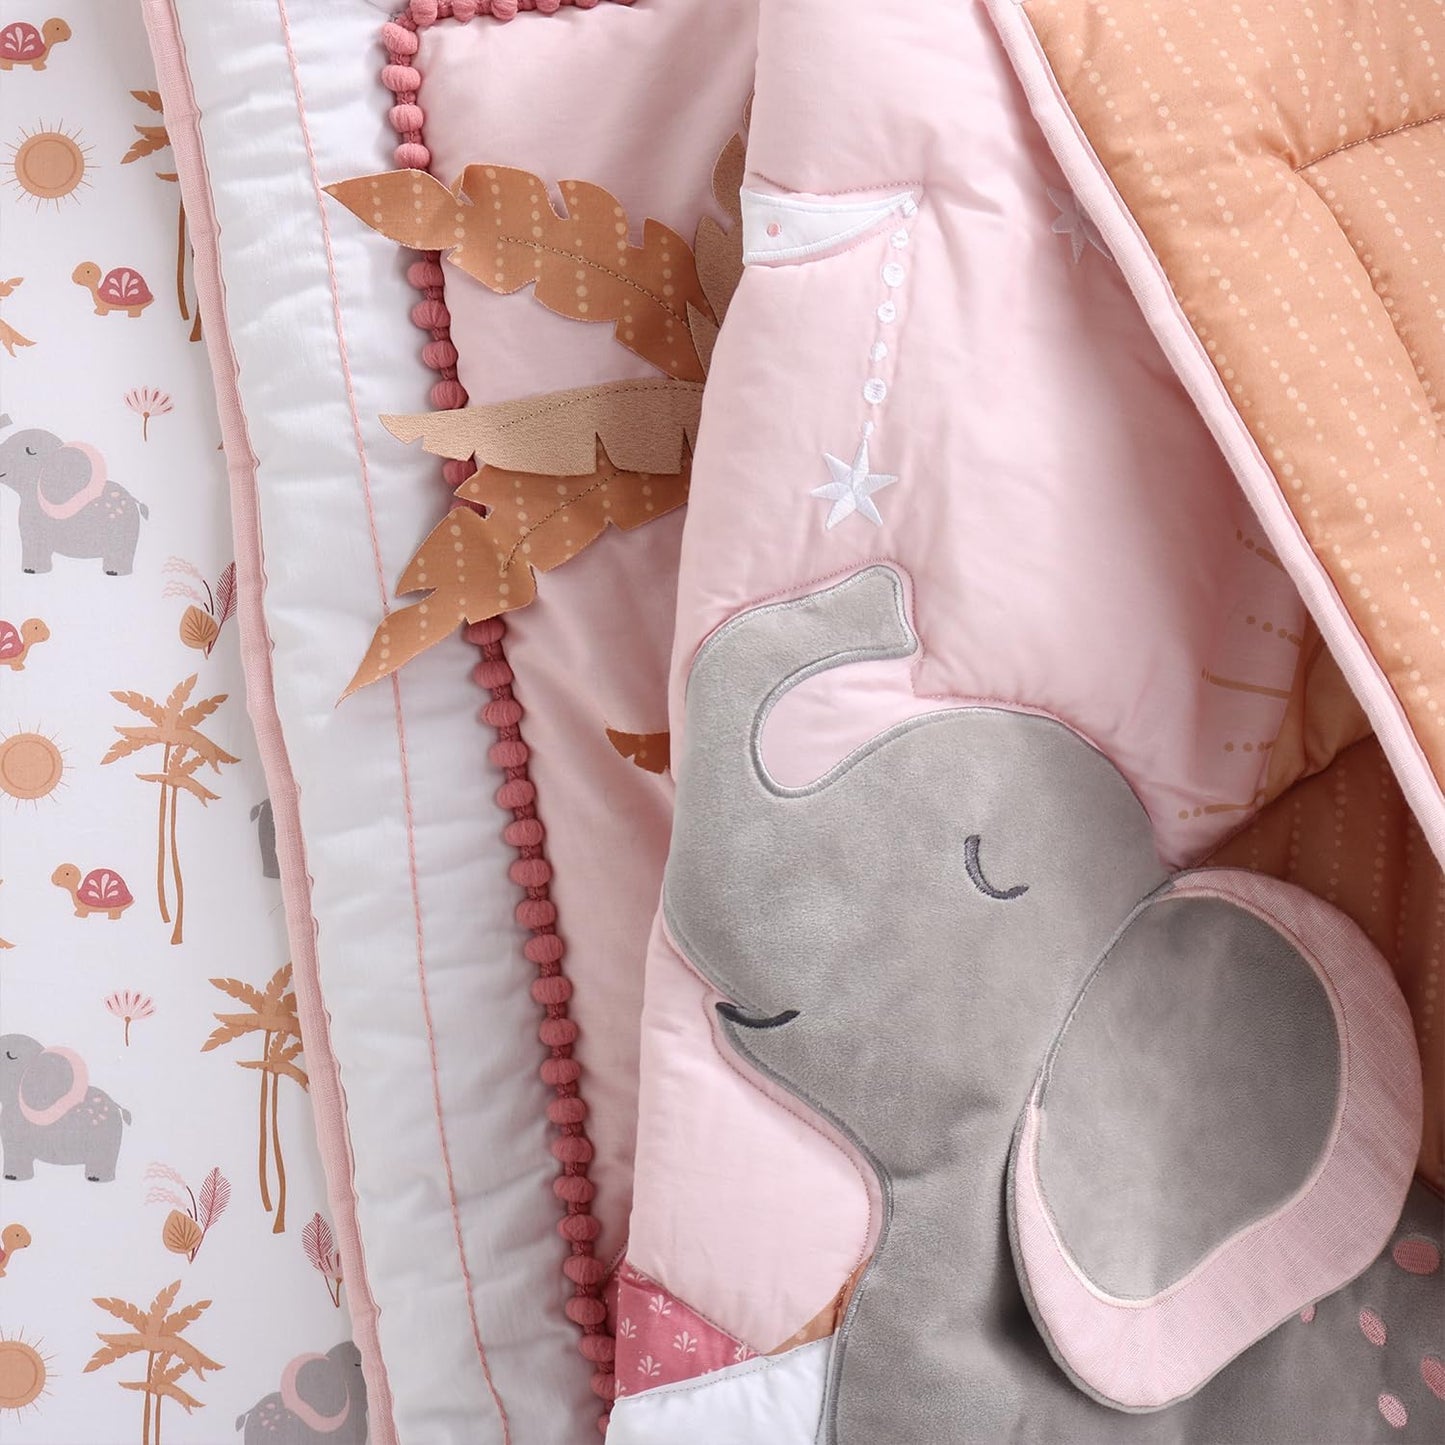 The Peanutshell Safari Crib Bedding Set for Girls, 4pc Organic Cotton Crib Comforter Set, Jungle Elephant Nursery Decor, Pink, Grey, White, Tan